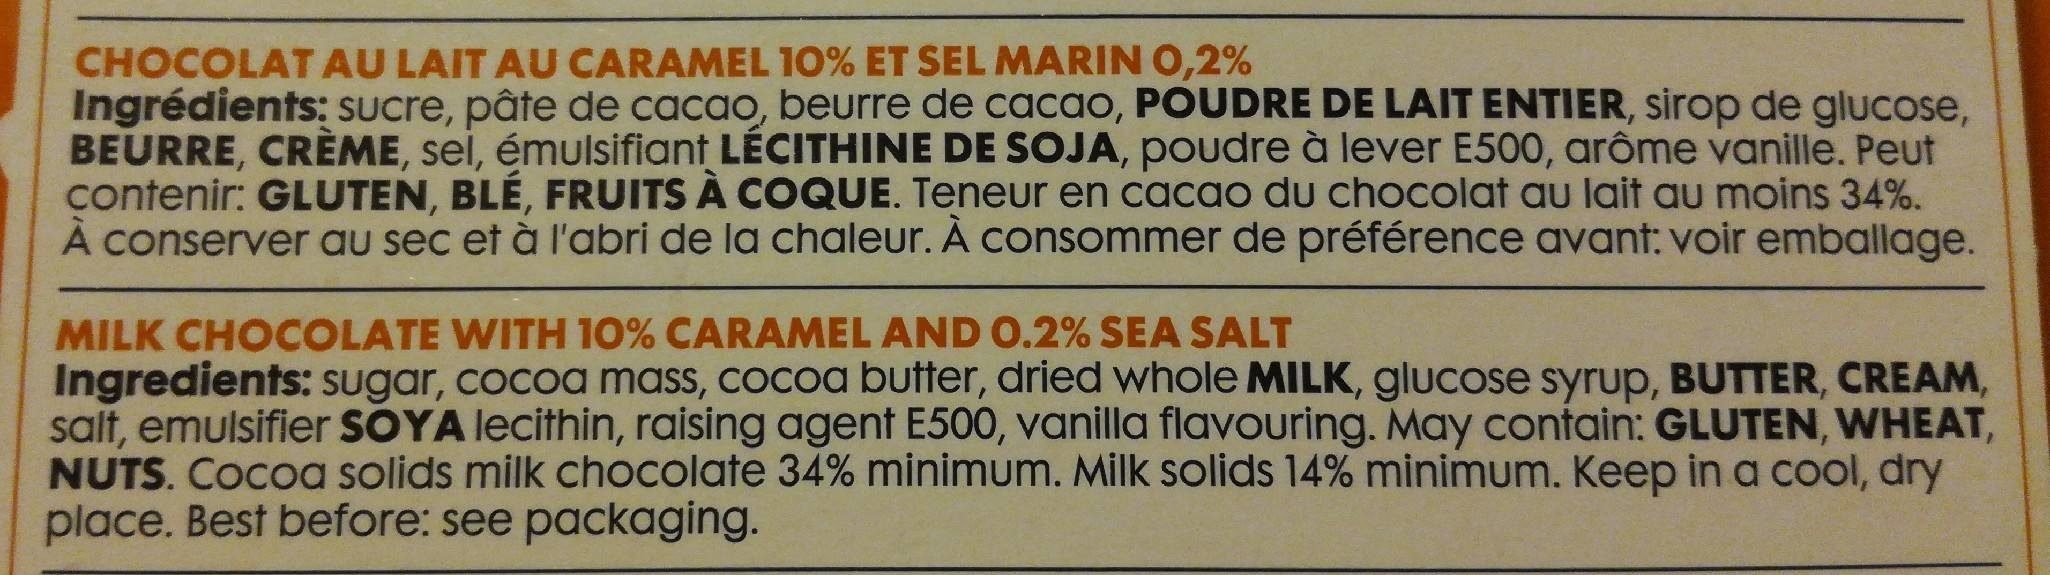 Chocolat au lait au caramel - Ingredients - fr